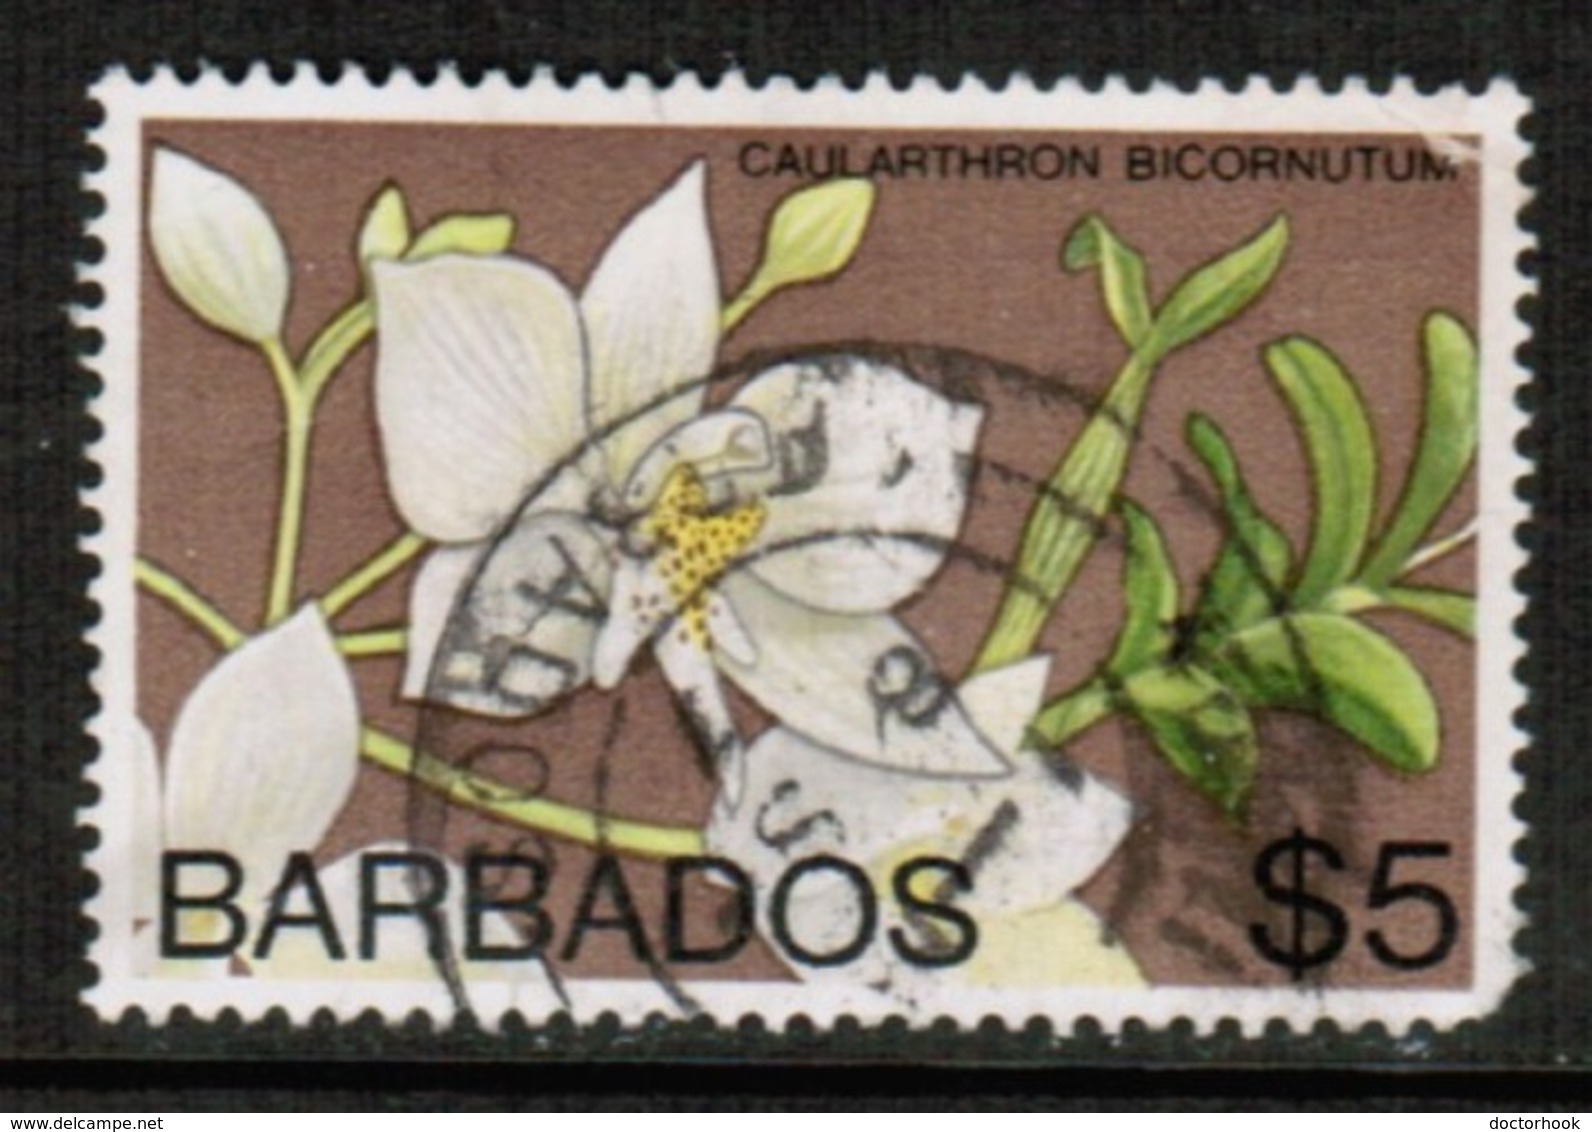 BARBADOS  Scott # 410 VF USED (Stamp Scan # 461) - Barbados (1966-...)